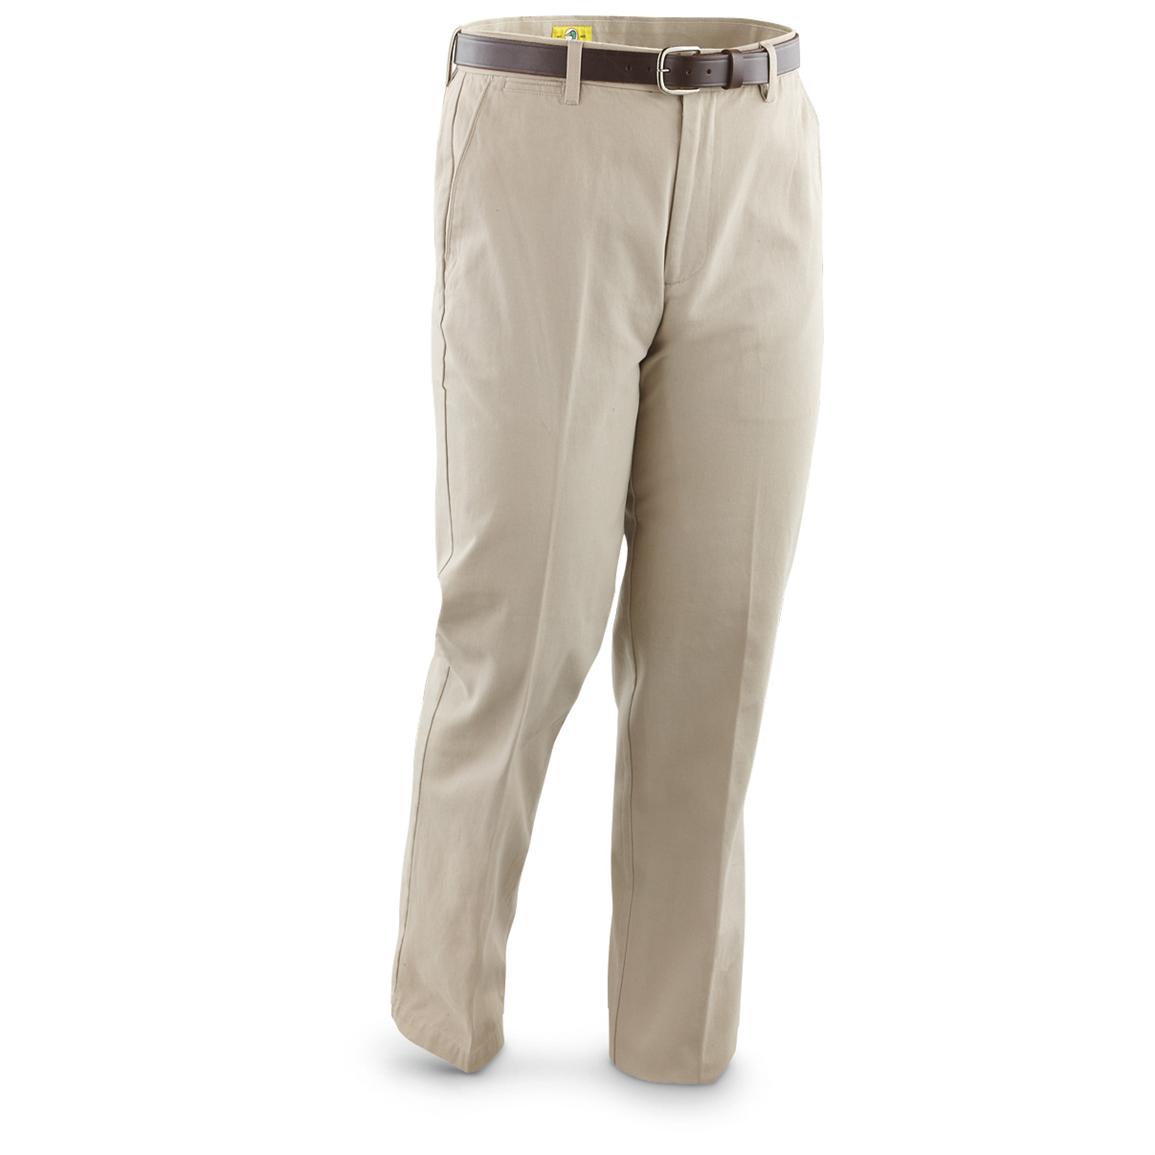 Duck Head® Flat Front Pants - 284634, Jeans & Pants at Sportsman's Guide